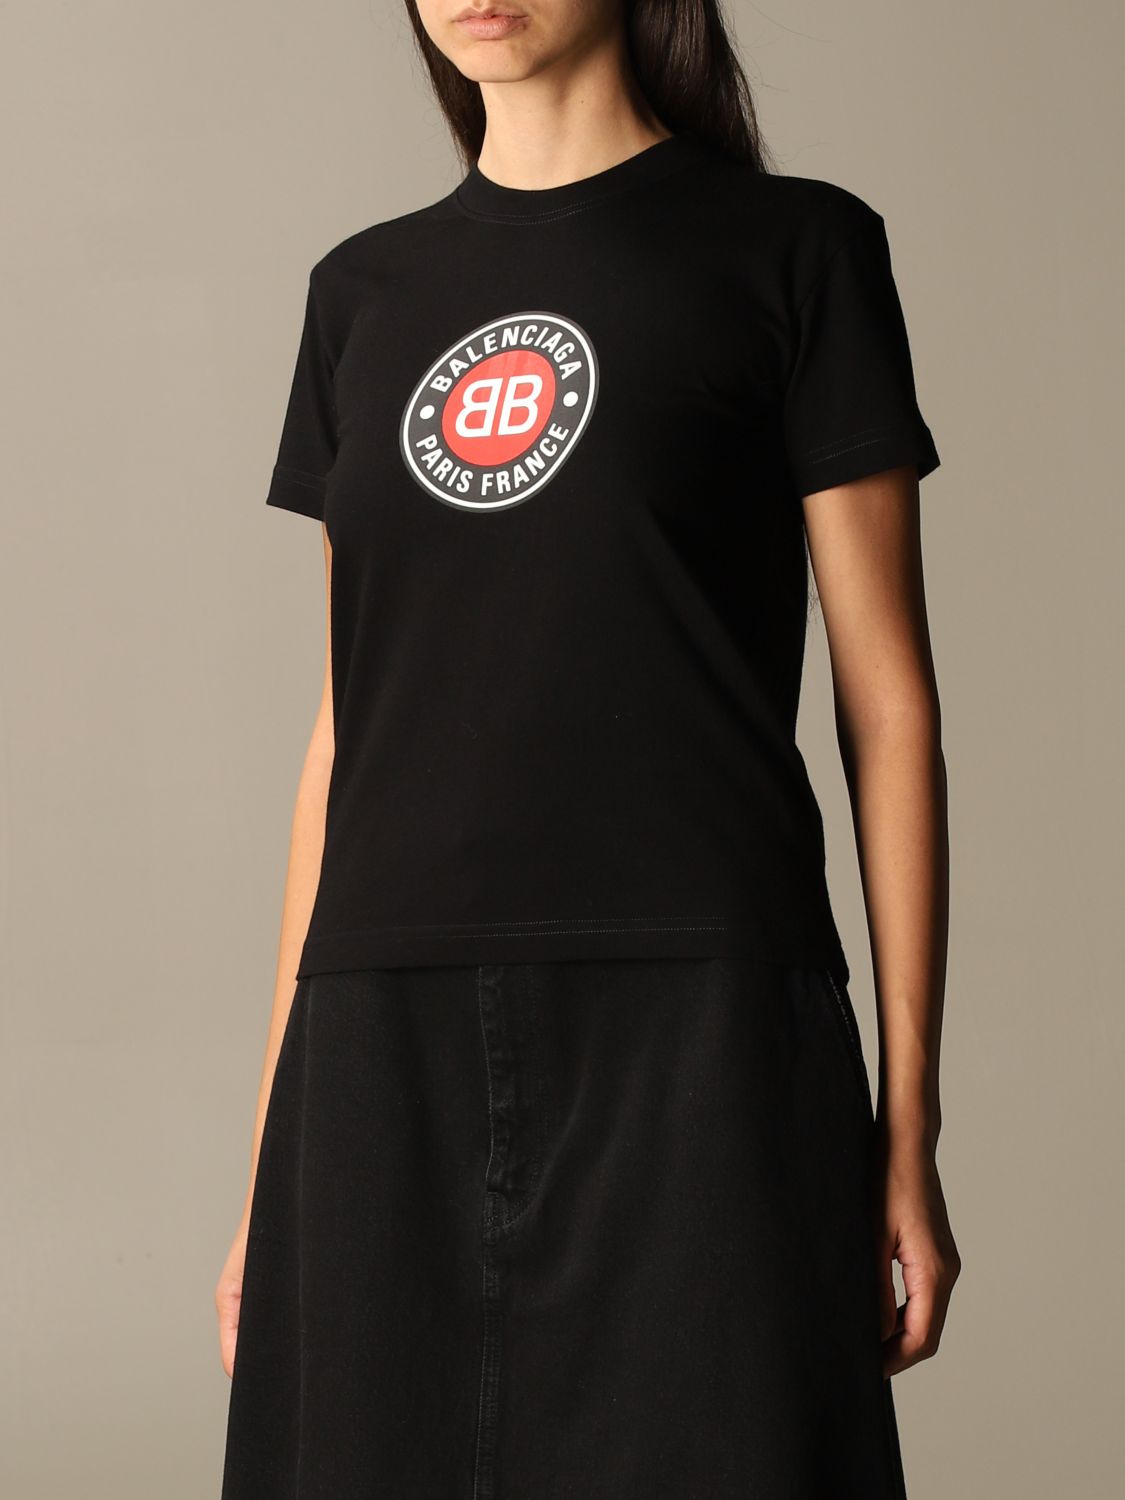 BALENCIAGA: vintage club t-shirt in cotton - Black | Balenciaga t-shirt 612964 TJVD6 online on 